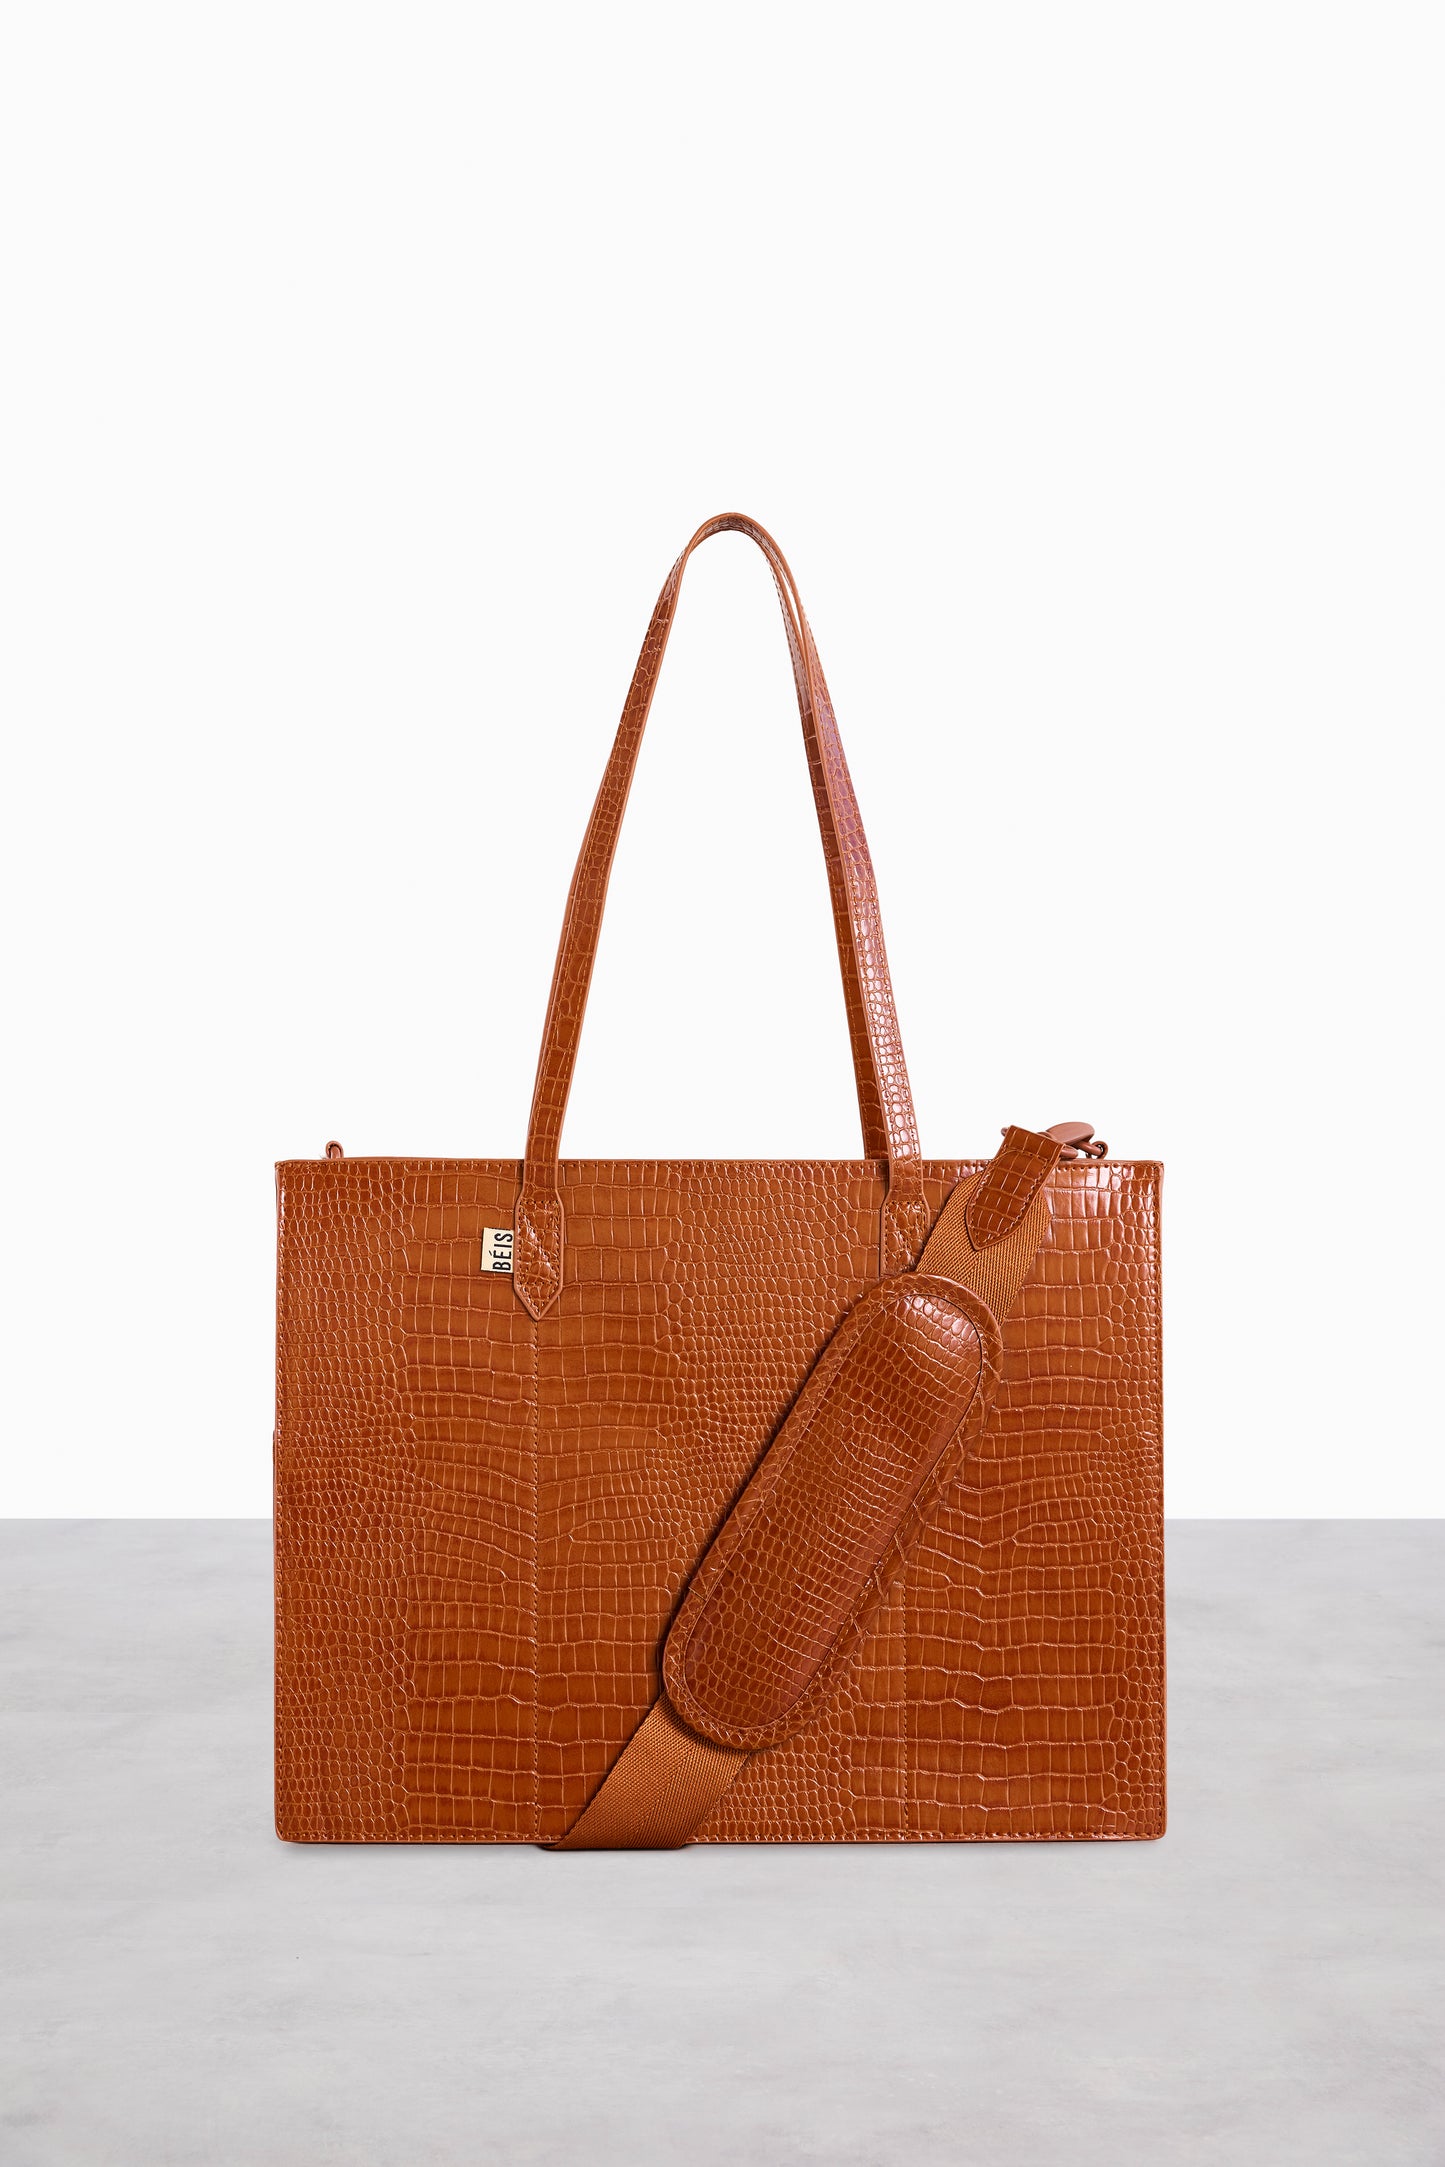 Classic Alligator Skin Tote Shoulder Handbag Shopping Travel Carry on Purse  Bag